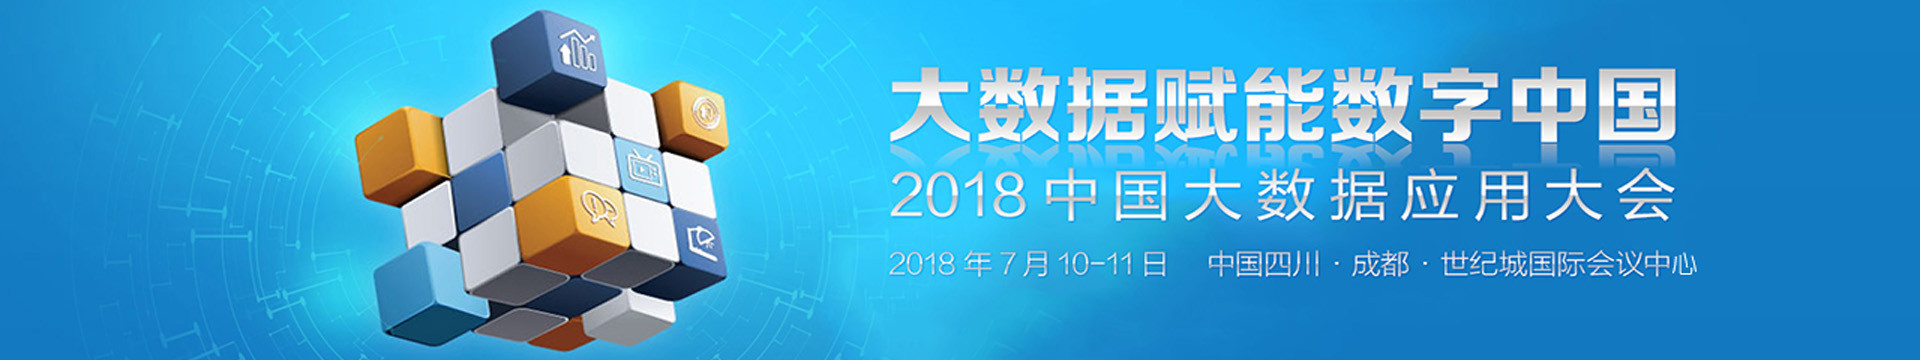 BDAC 2018中国大数据应用大会